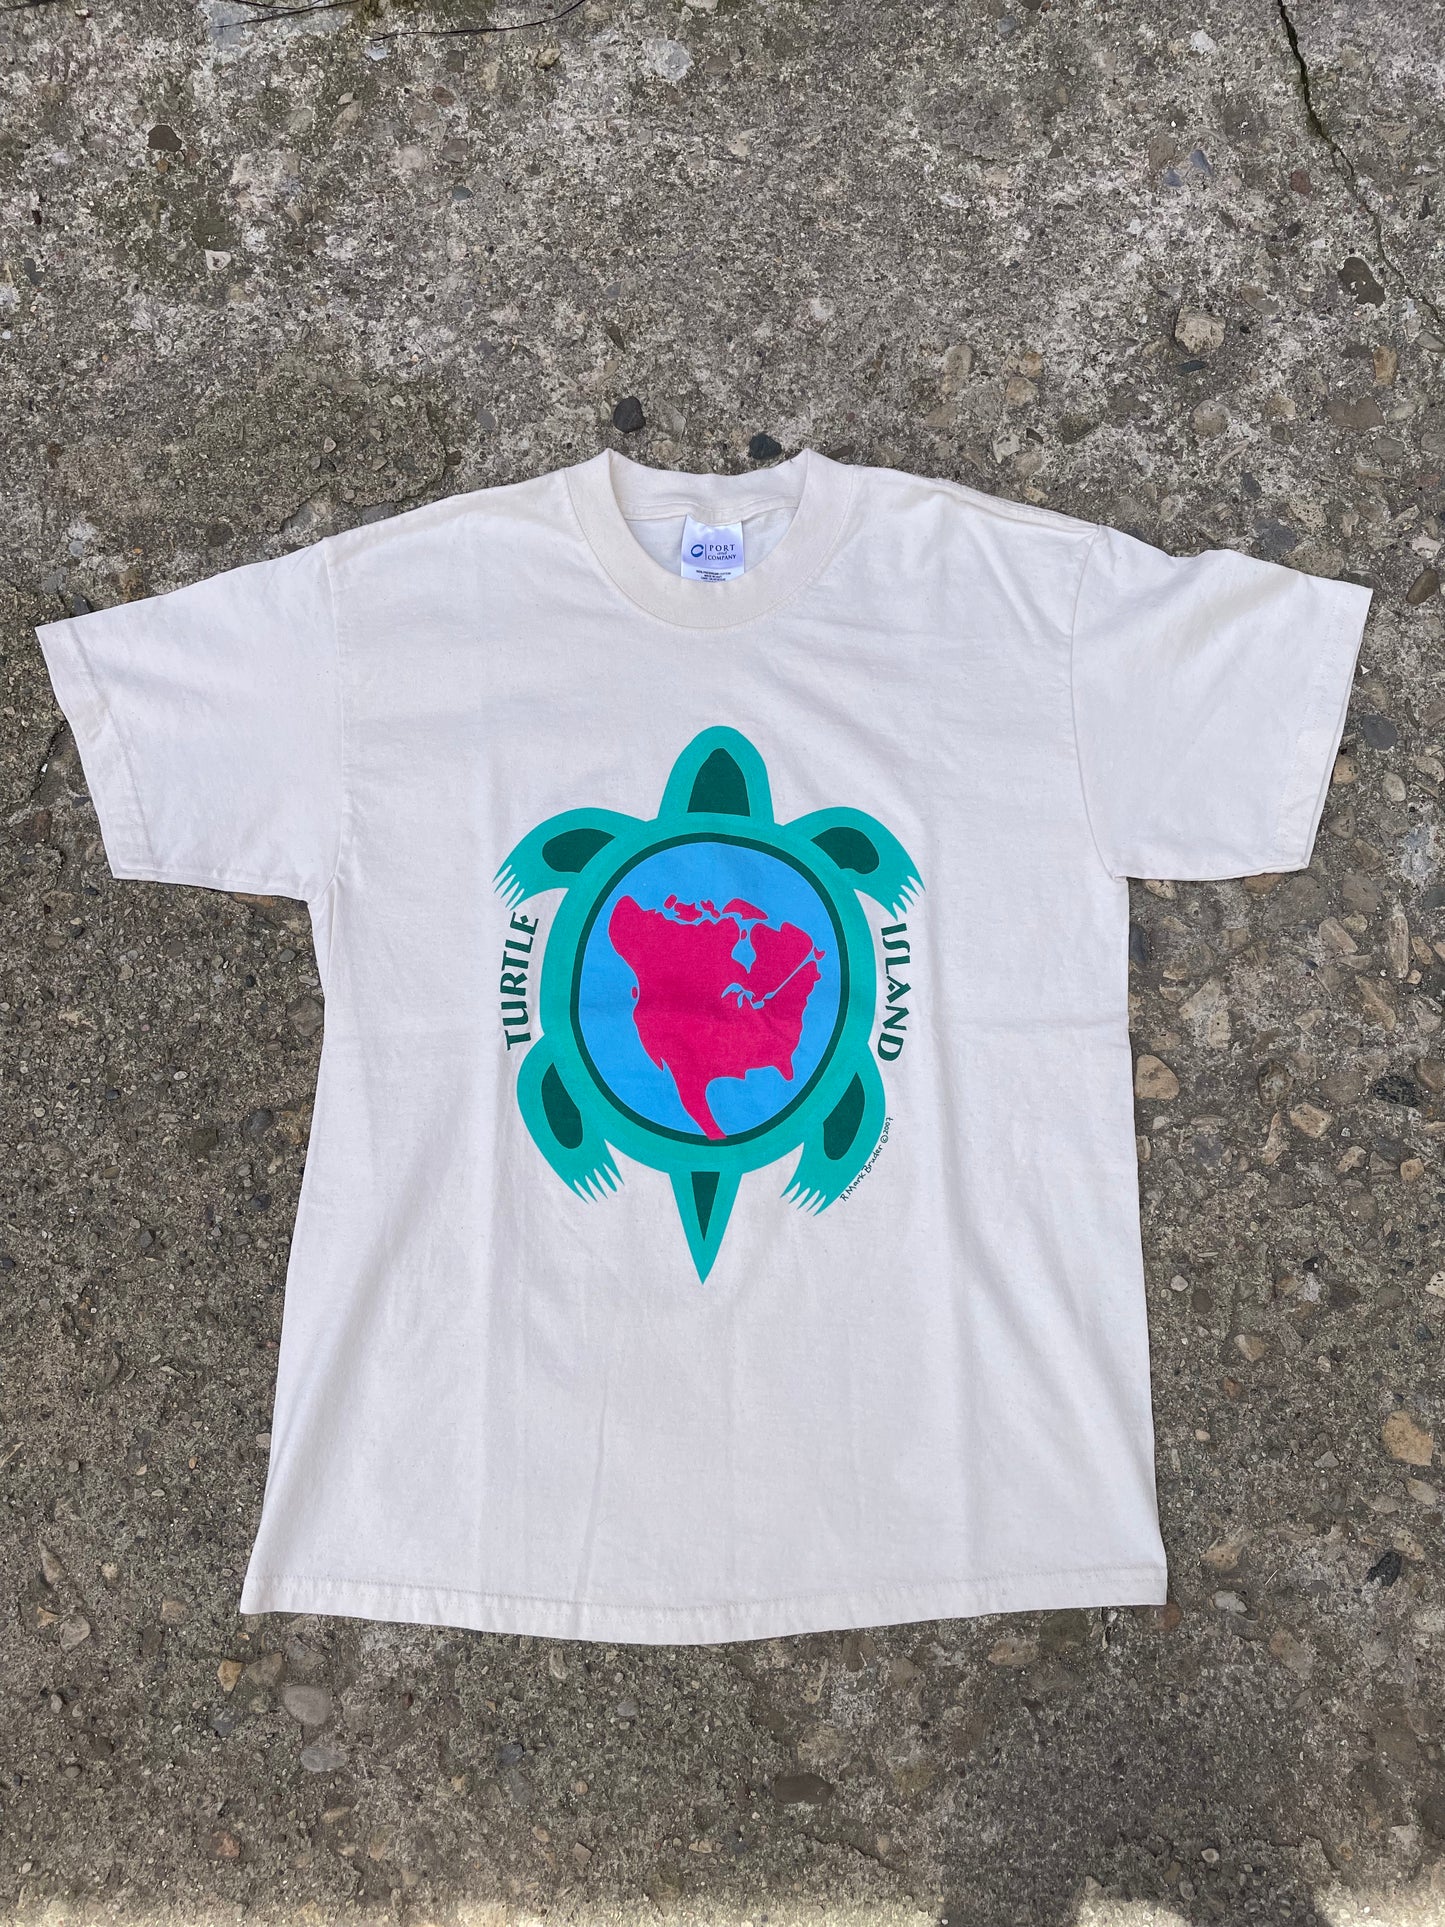 2007 Turtle Island Art Graphic T-Shirt - M